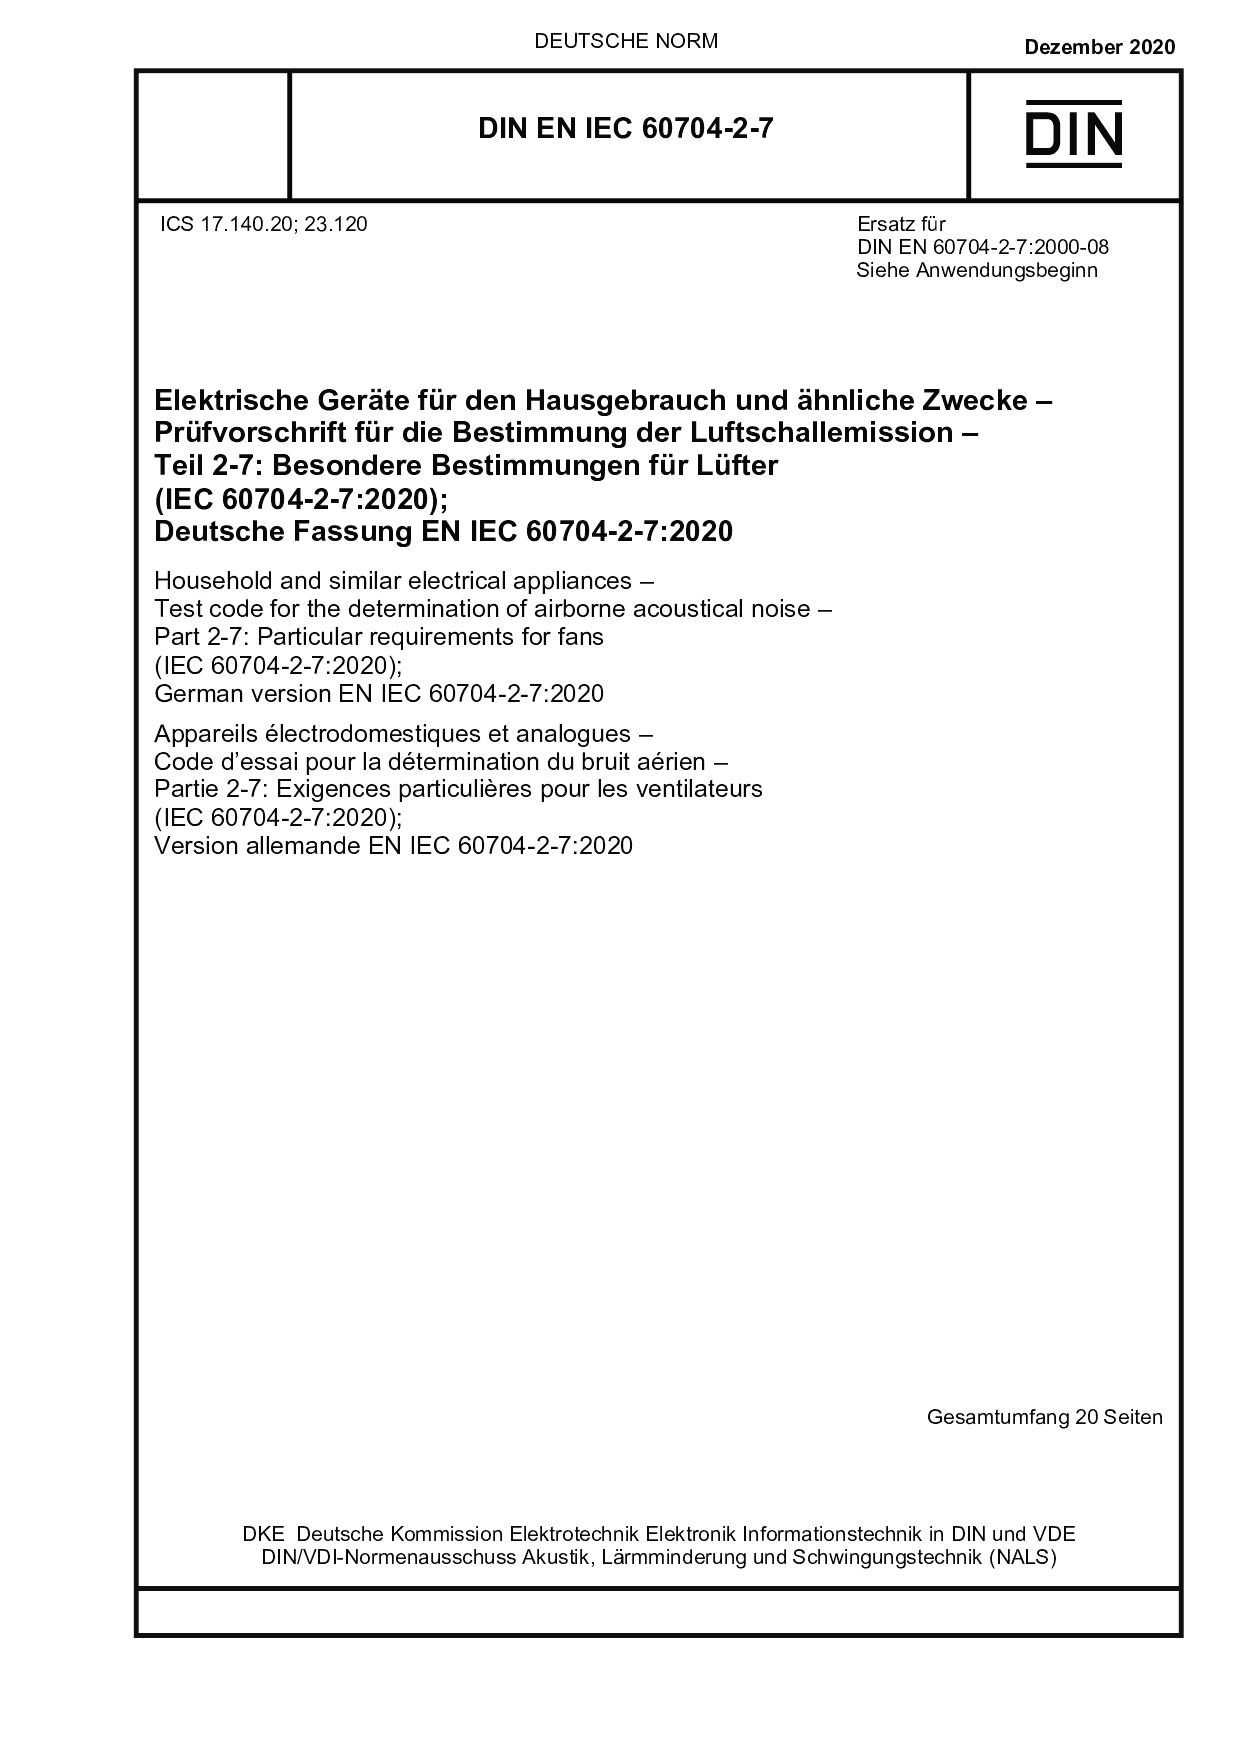 DIN EN IEC 60704-2-7:2020封面图